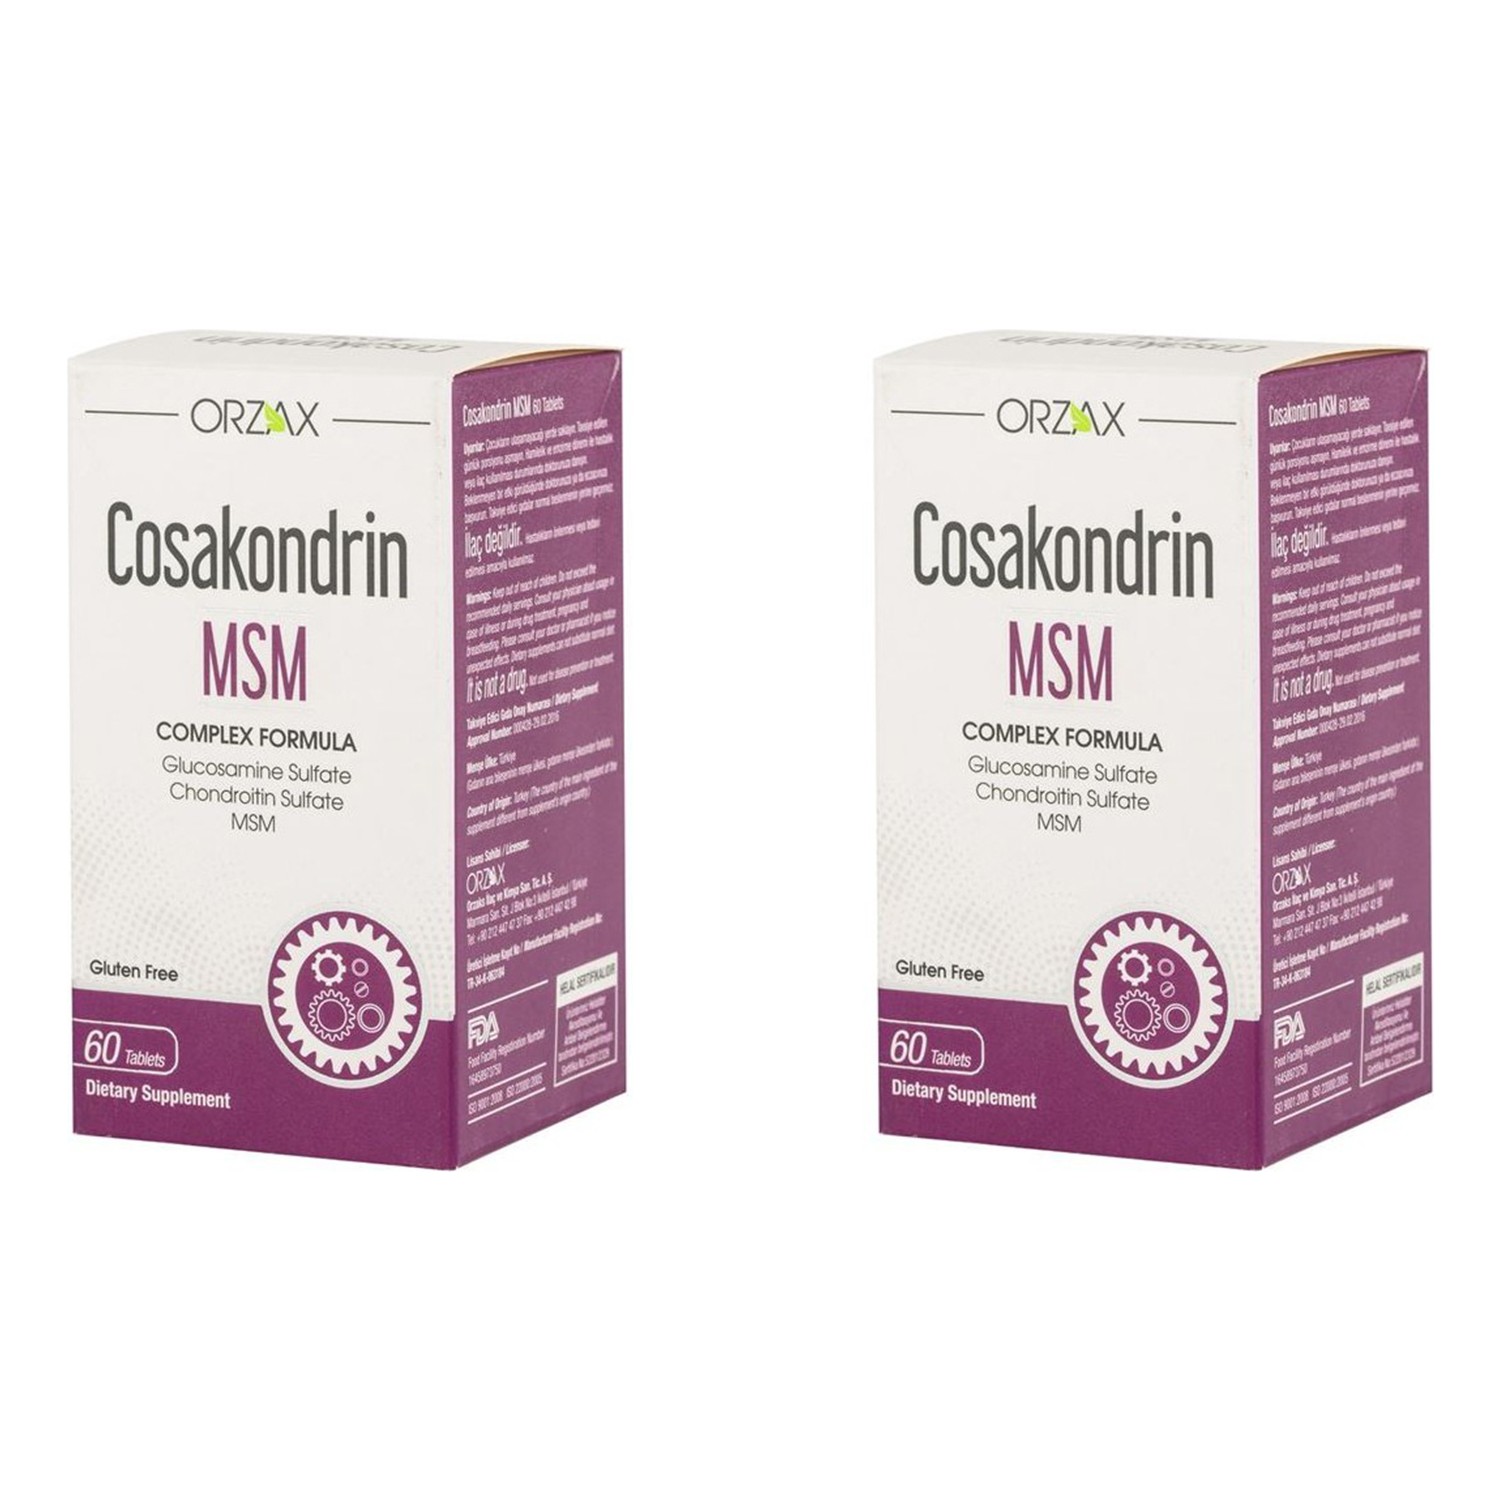 Пищевая добавка Orzax Cosakondrin Msm, 2 упаковки по 60 таблеток пищевая добавка orzax cosakondrin msm 60 таблеток